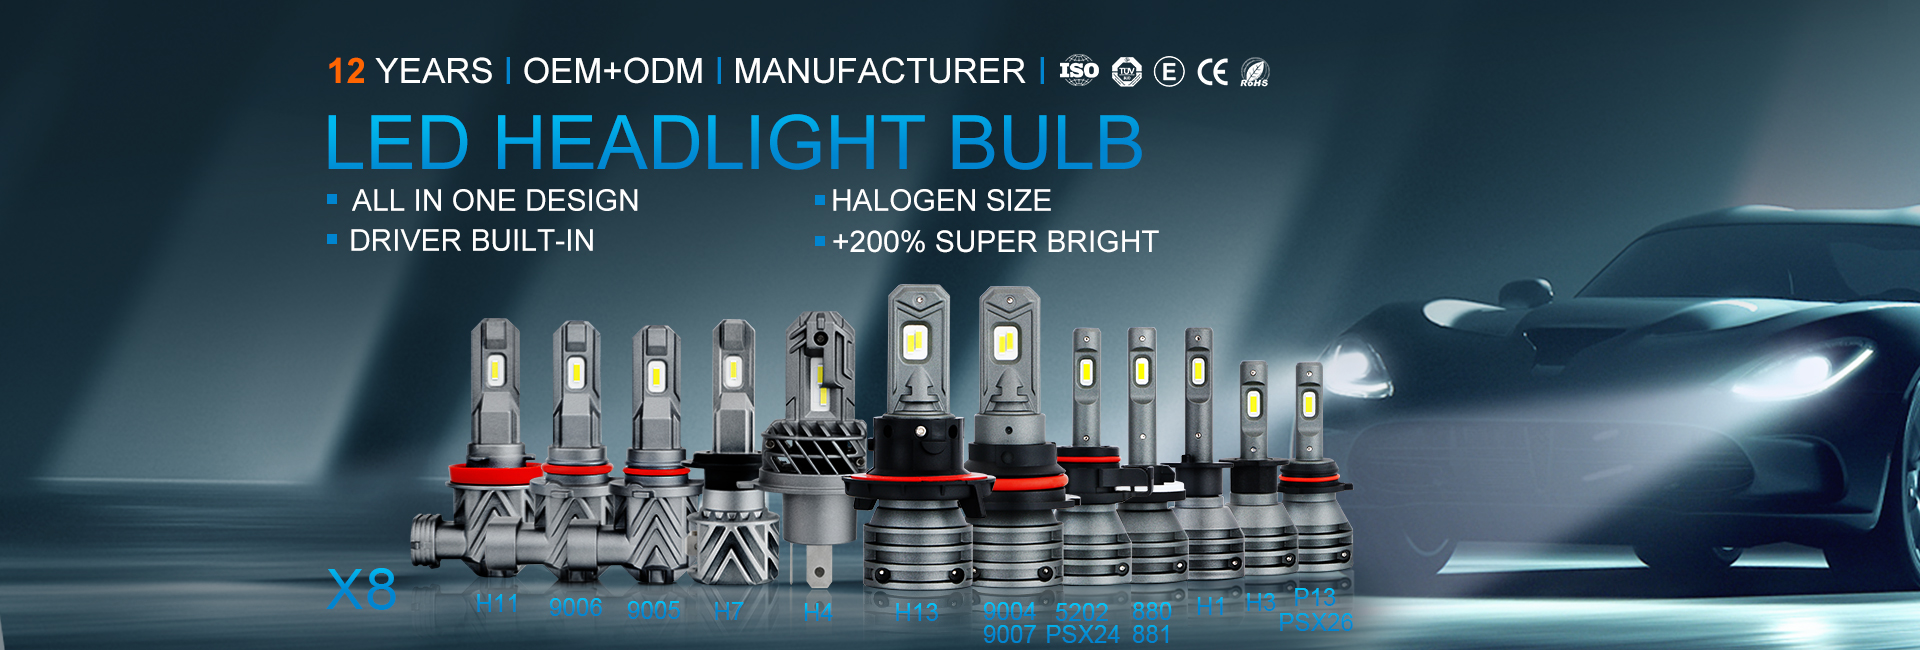 X8 LED Headlight Bulb